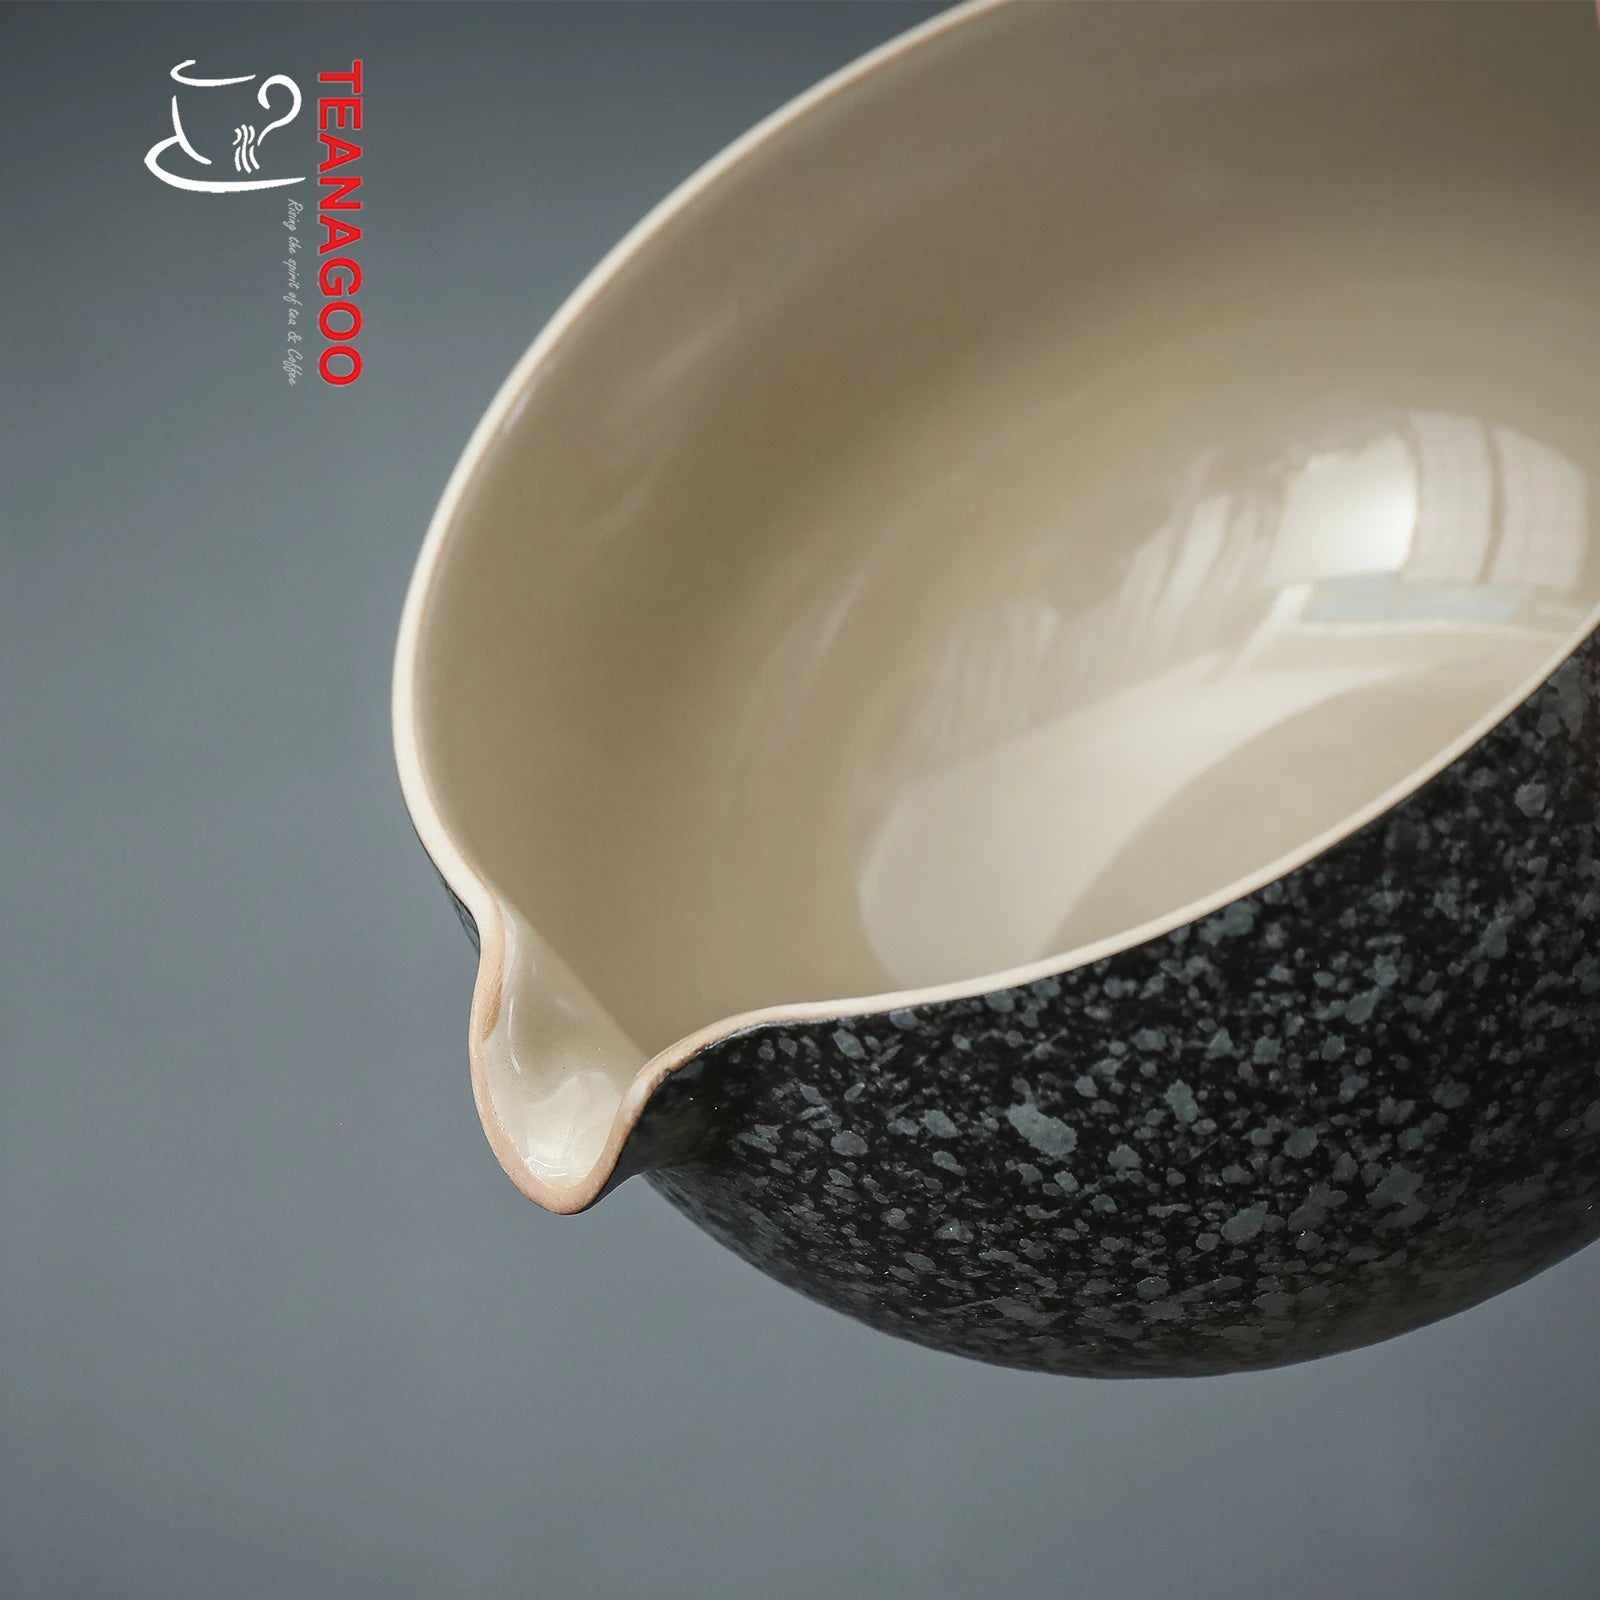  Artcome Traditional Japanese Matcha Tea Set, Matcha Whisk,  Traditional Scoop, Matcha Bowl & Caddy, Ceramic Whisk Holder, Handmade  Matcha Ceremony Kit (9Pcs) : Home & Kitchen